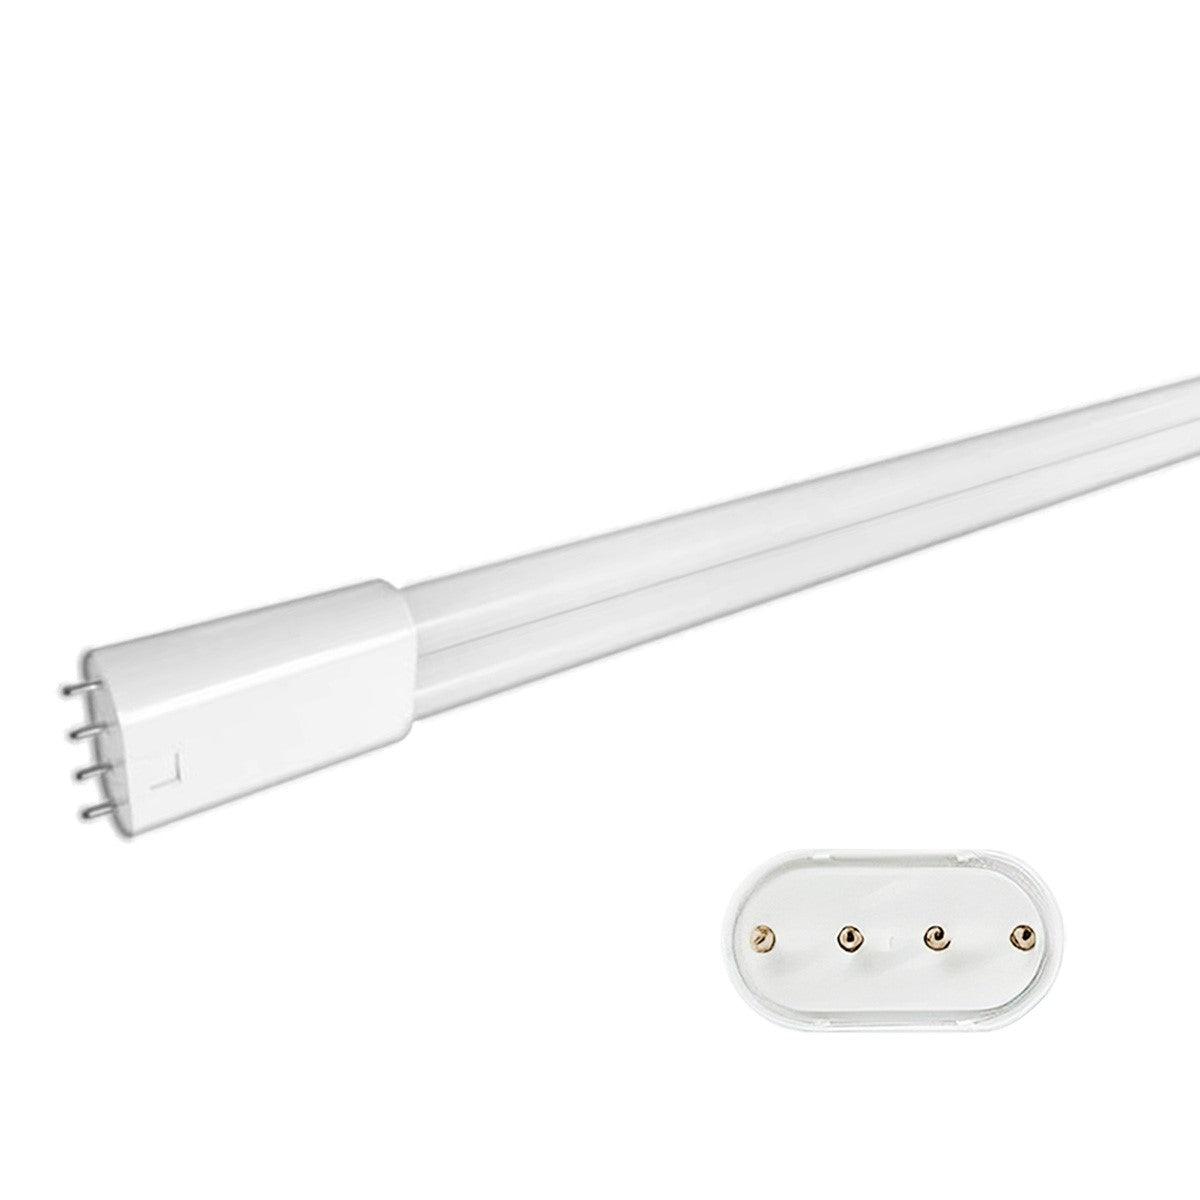 4 Pin PLL LED Bulb, 14 Watt 2100 Lumens, 5000K, Horizontal, Replaces 40W CFL, 2G11 Base, Electronic Ballast